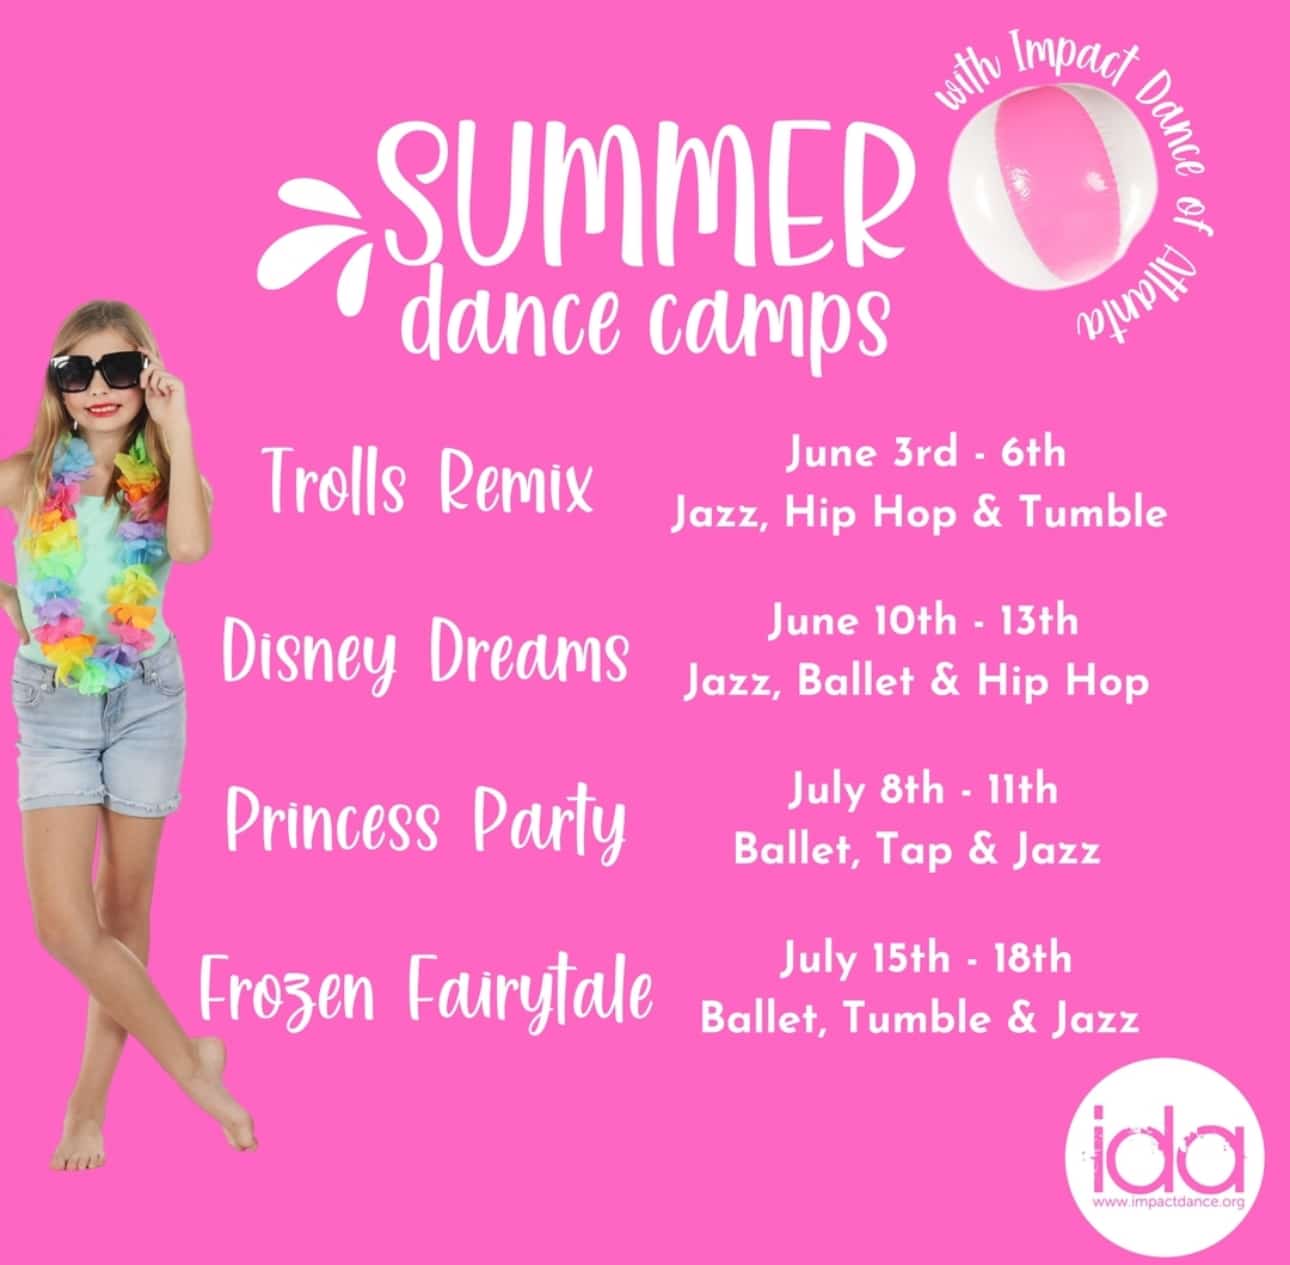 Summer dance camps